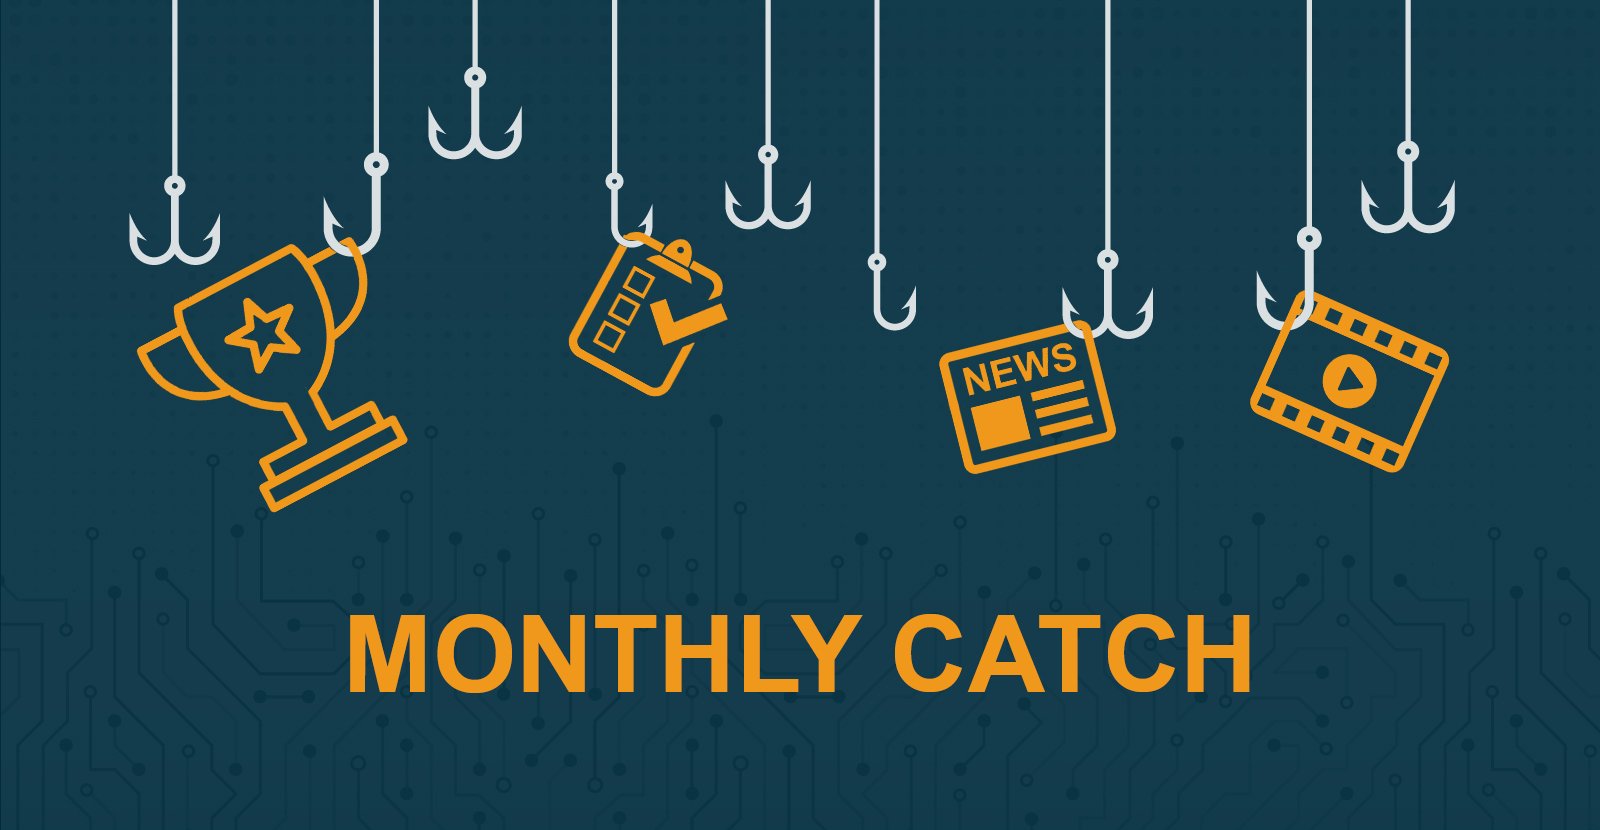 Payara Monthly catch header for blog.